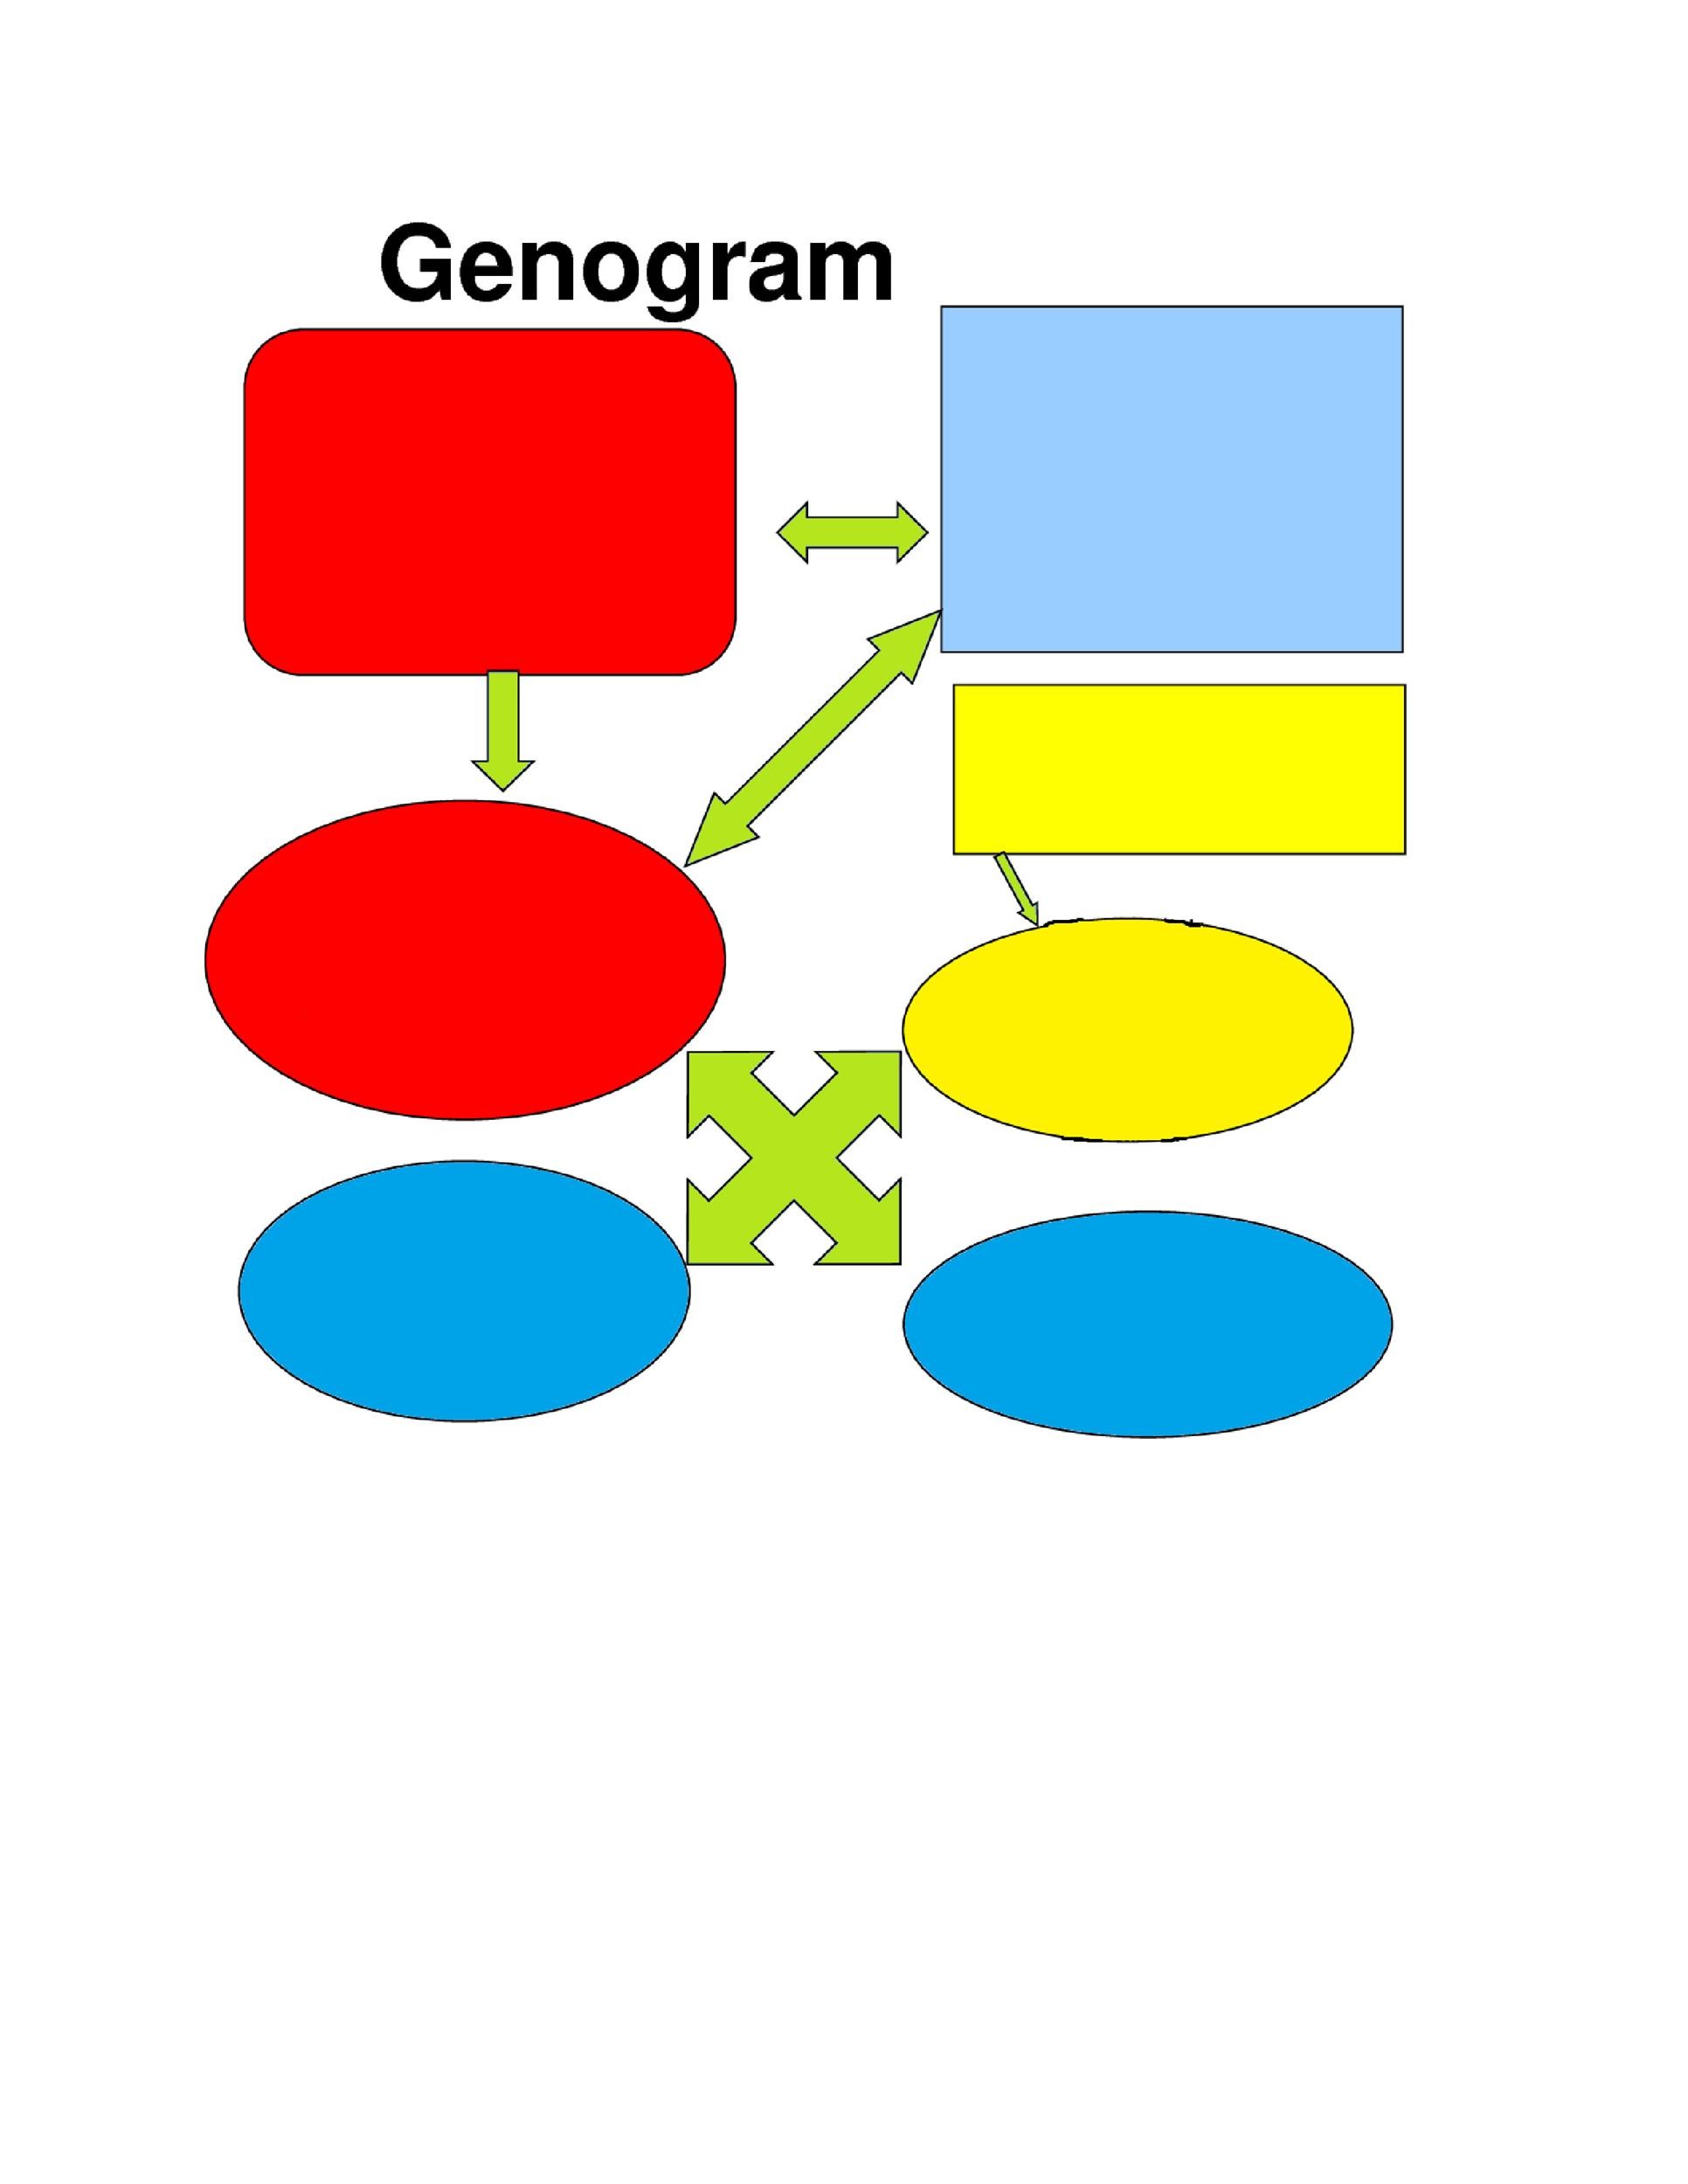 30 Free Genogram Templates & Symbols - Template Lab